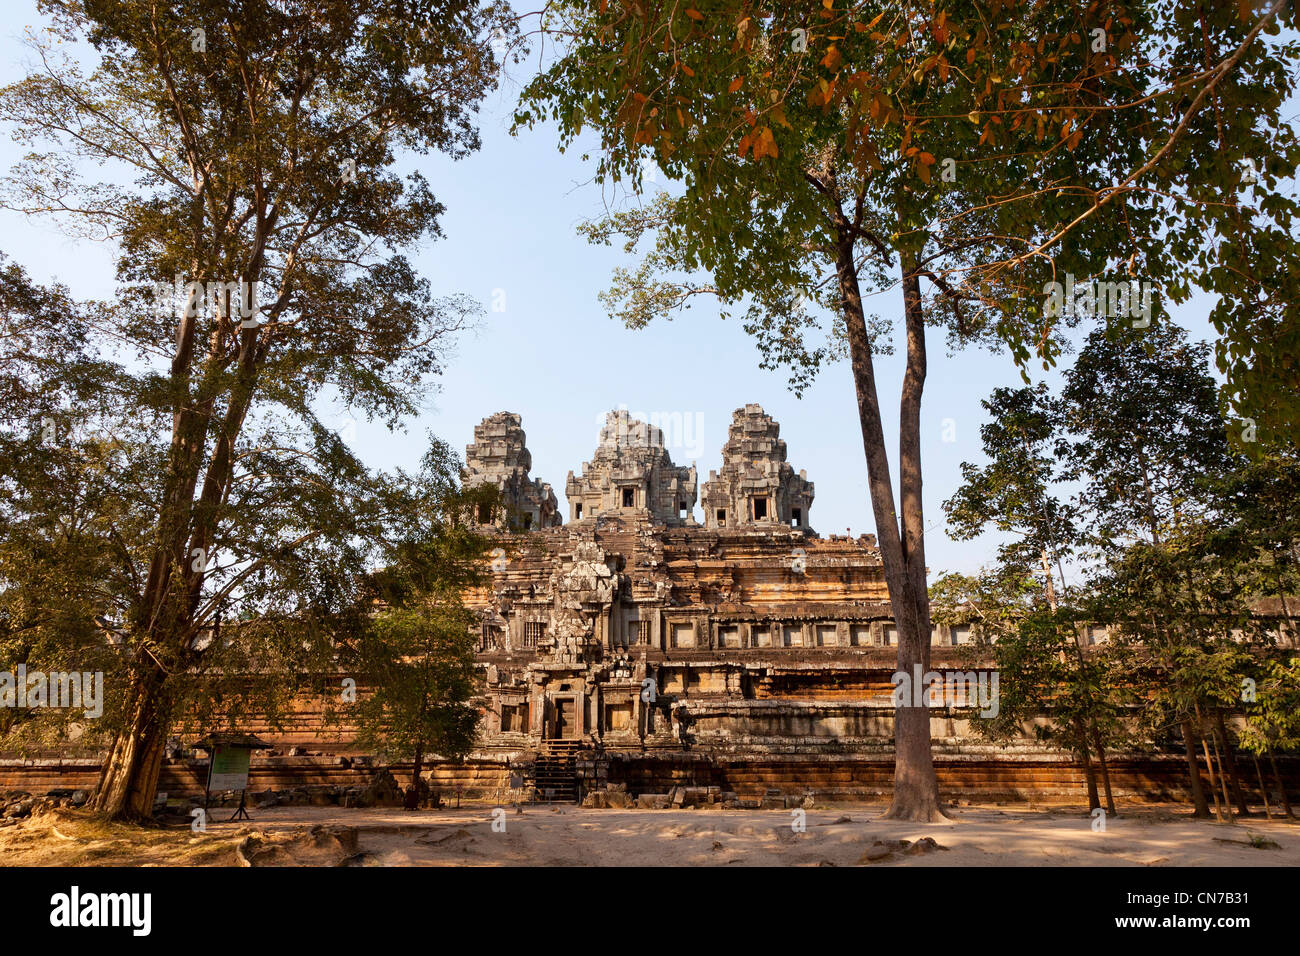 Angkor Temple Banteay Kdei, Siam Reap, Cambodia Stock Photo